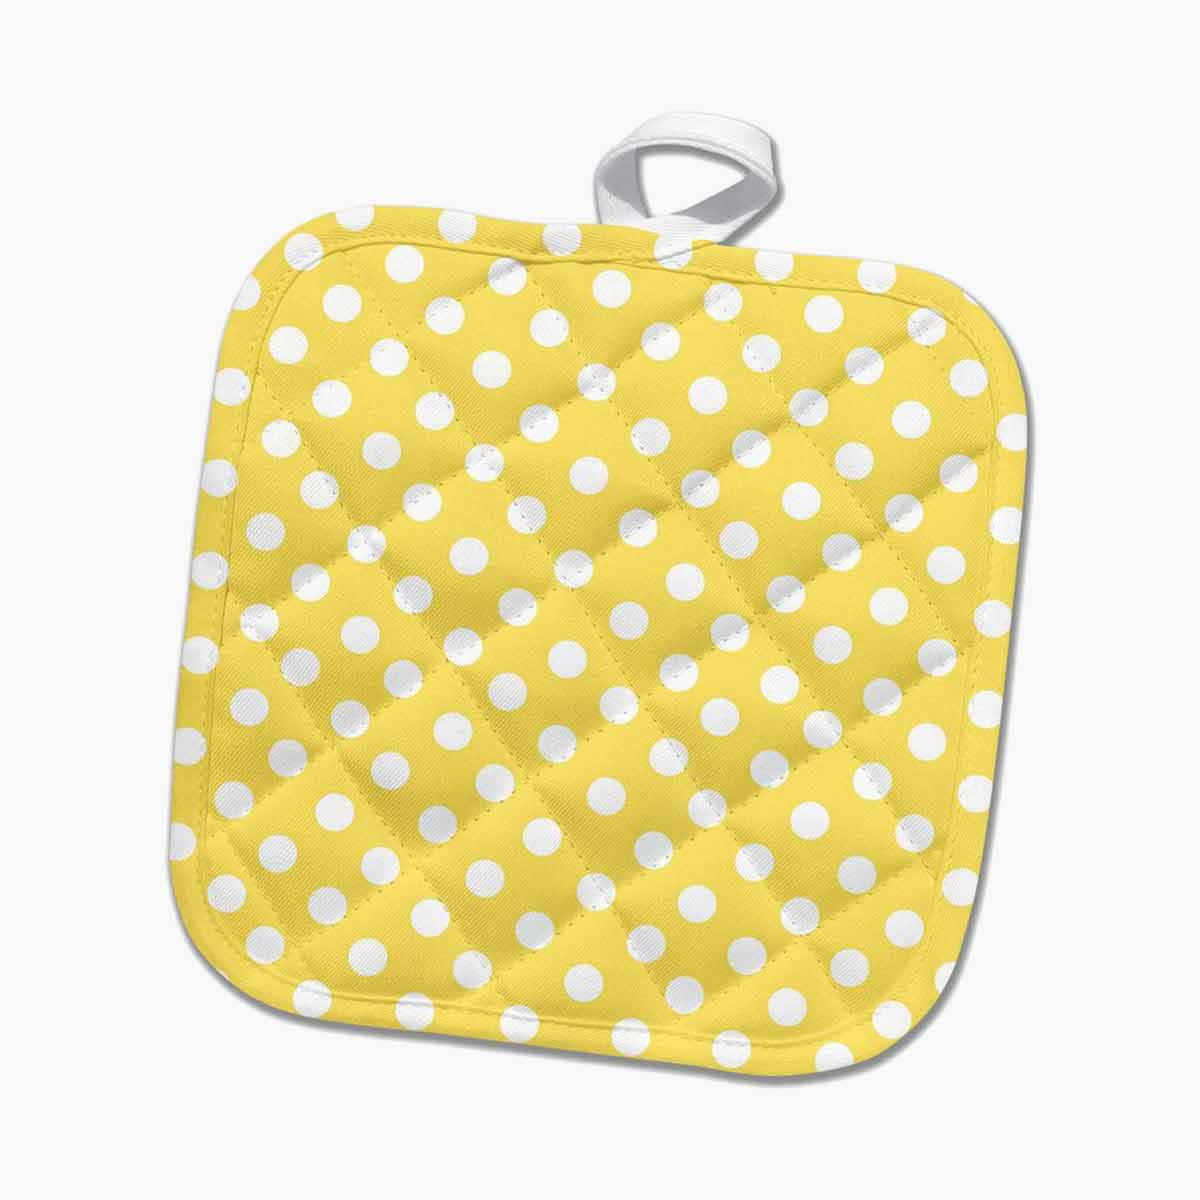 Yellow and white polka dot pot holder.